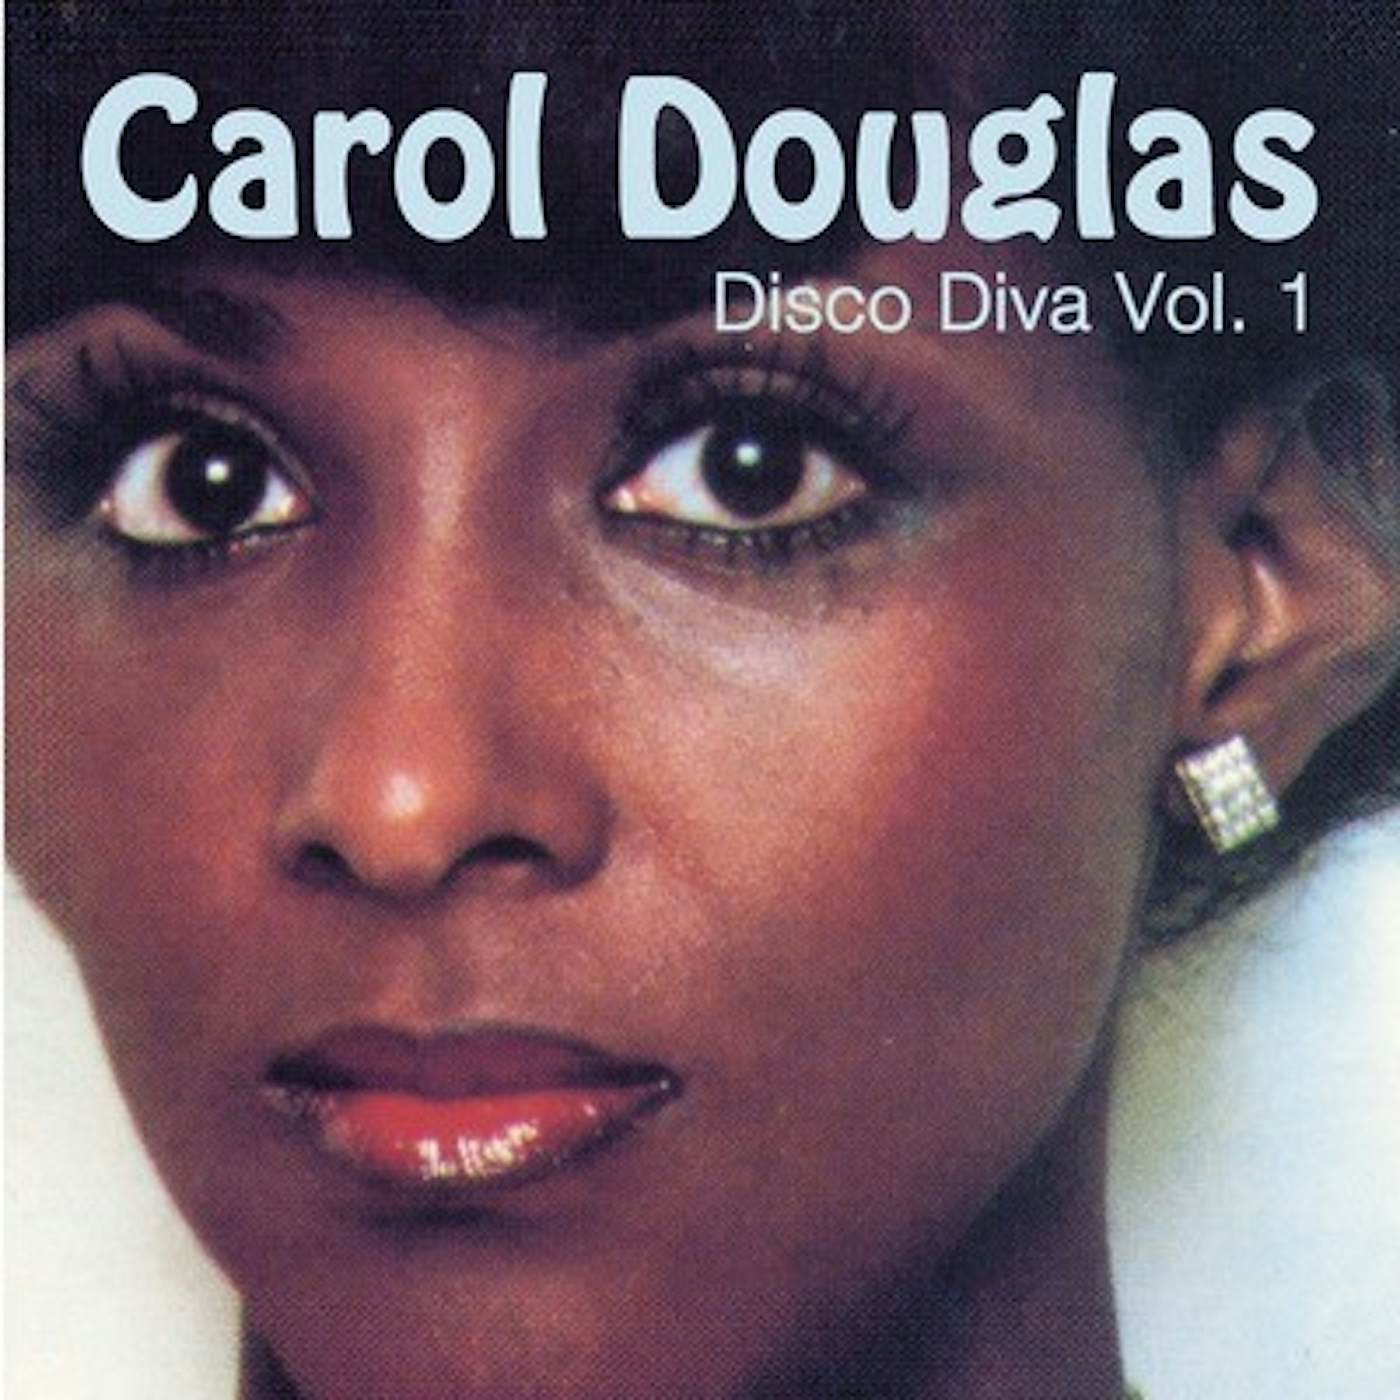 Carol Douglas DISCO DIVA VOL. 1 CD